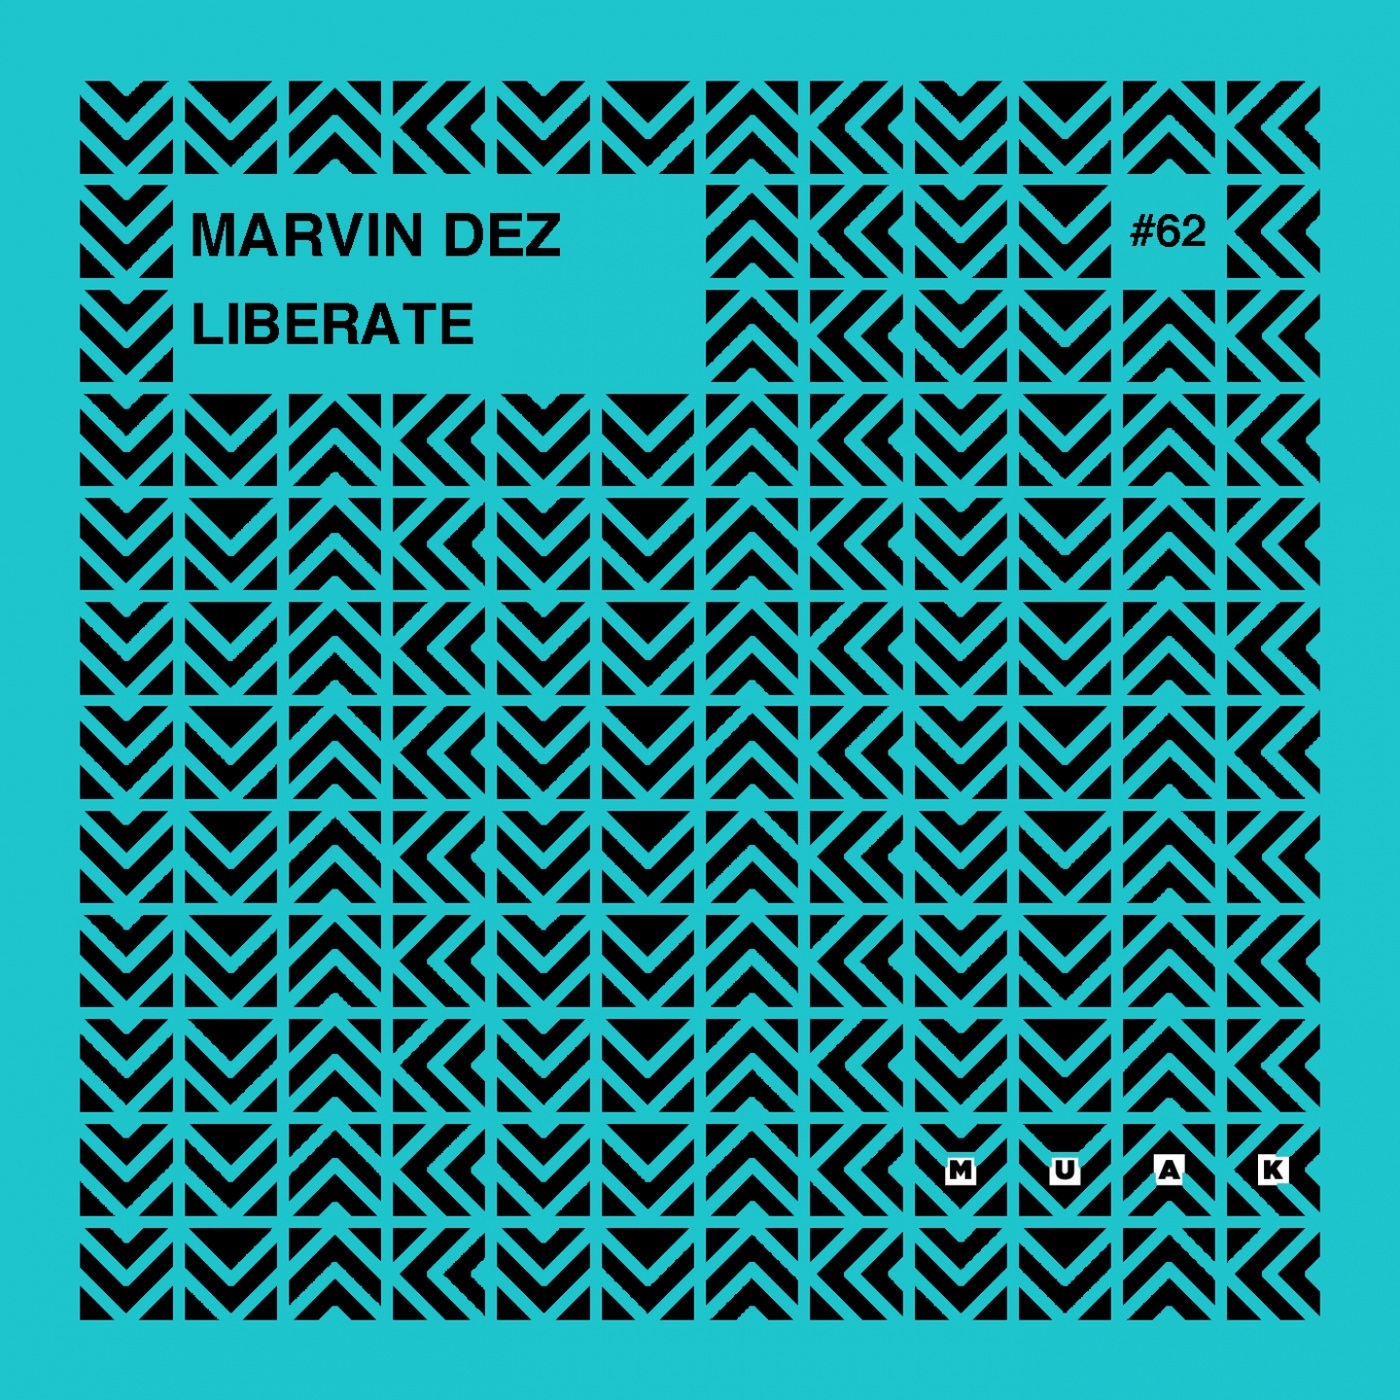 Marvin Dez - Liberate / Muak Music